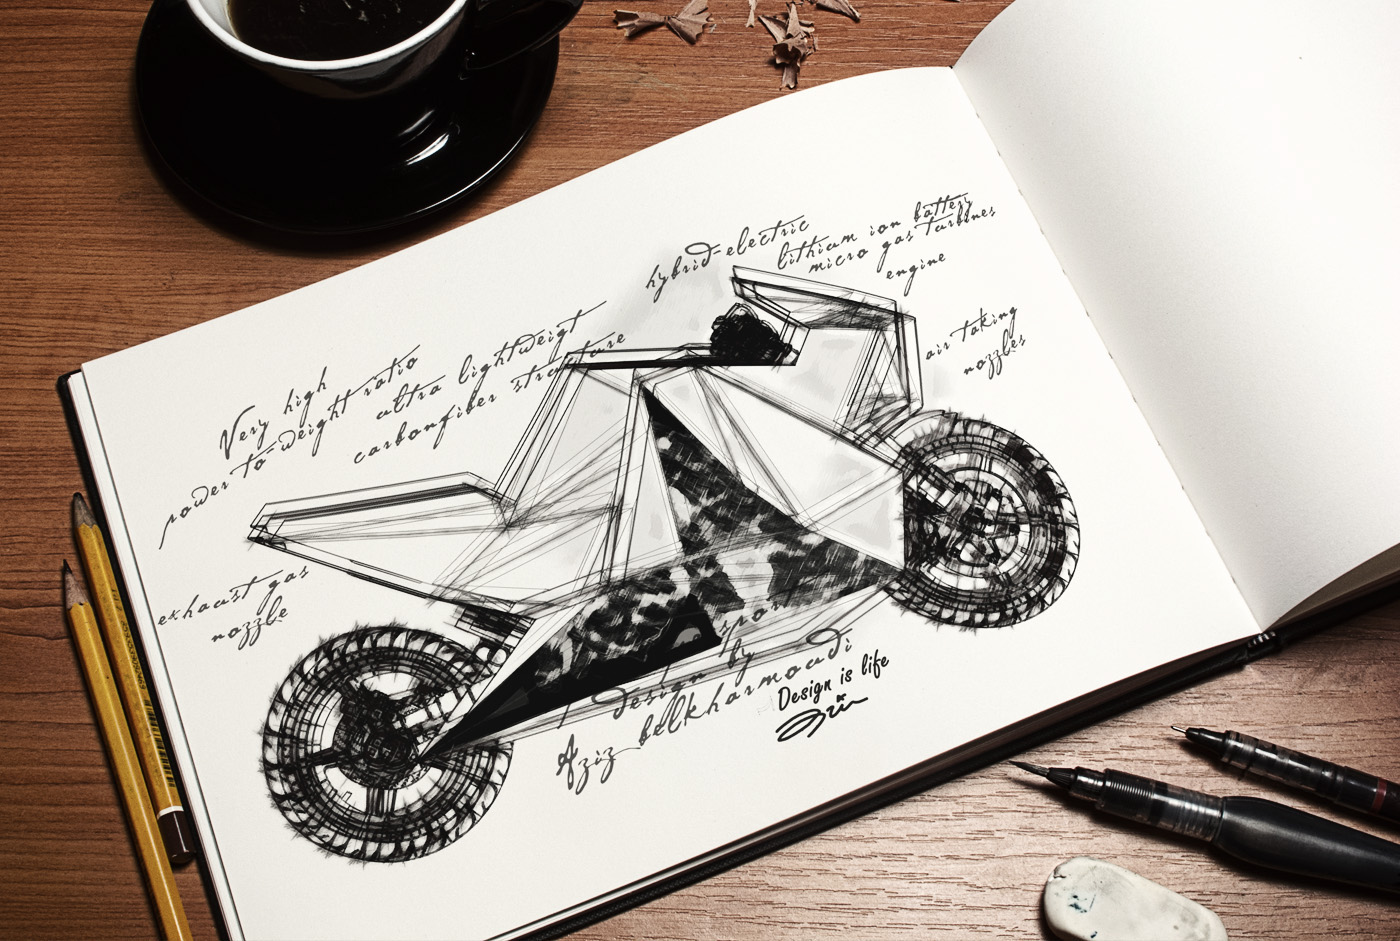 venom vision concept automotivedesign motorcycle design future Belkharmoudi Aziz